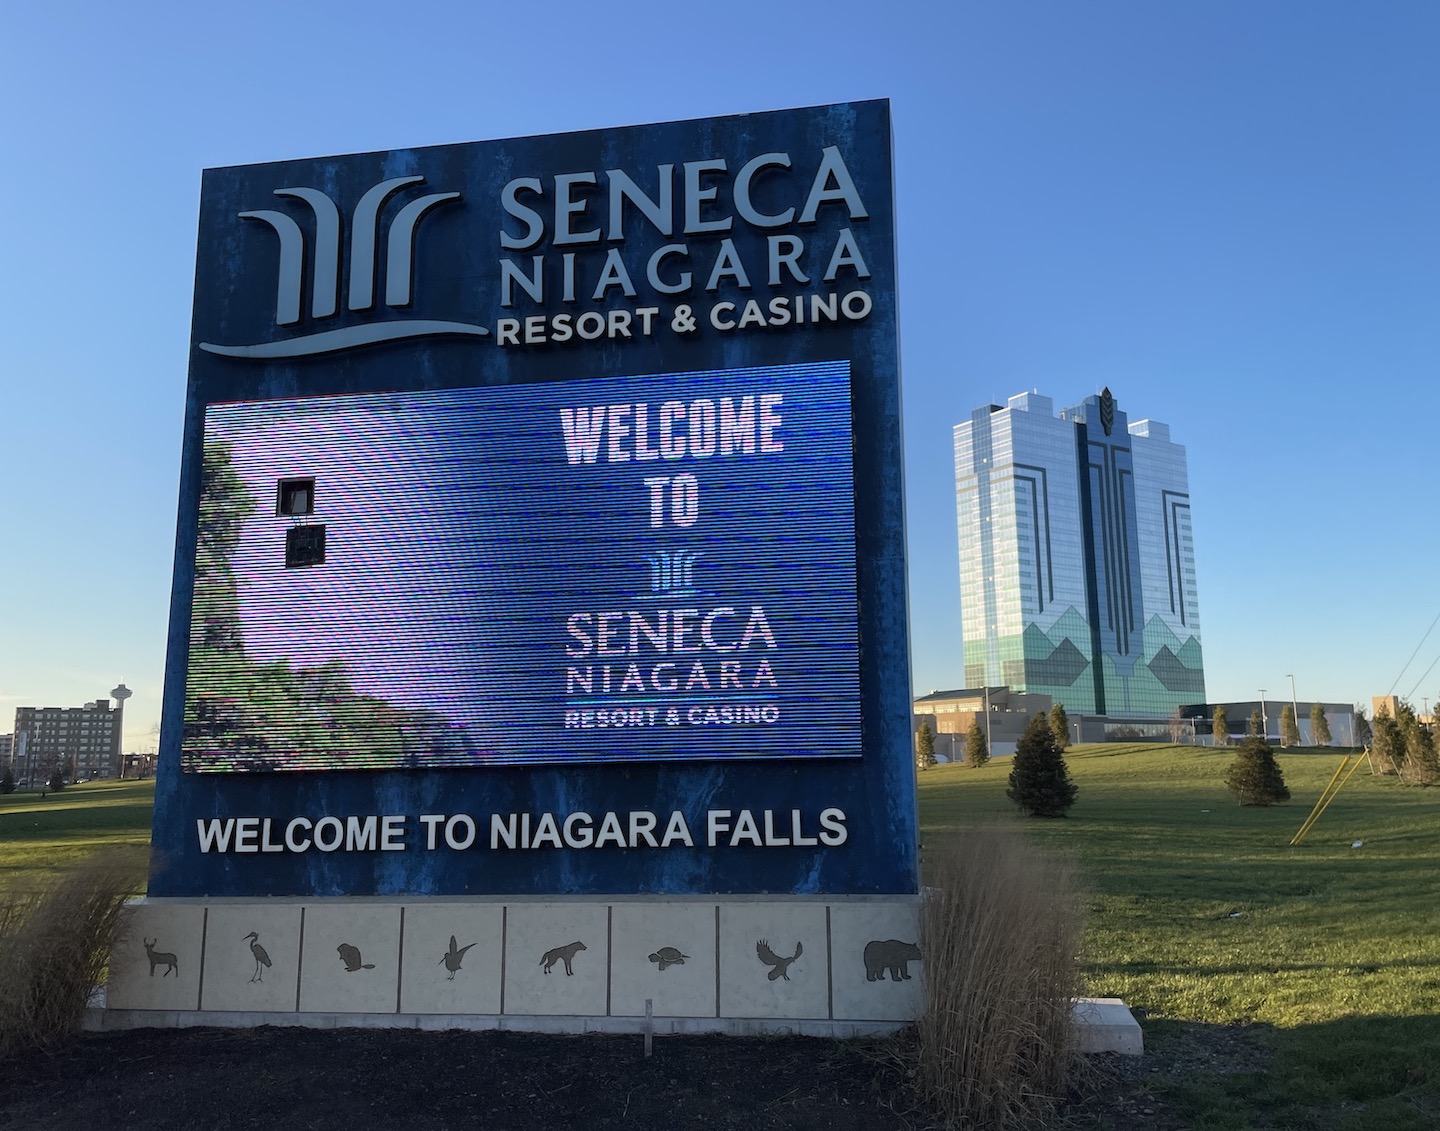 The sign points the way to Seneca Niagara Resort & Casino in downtown Niagara Falls.